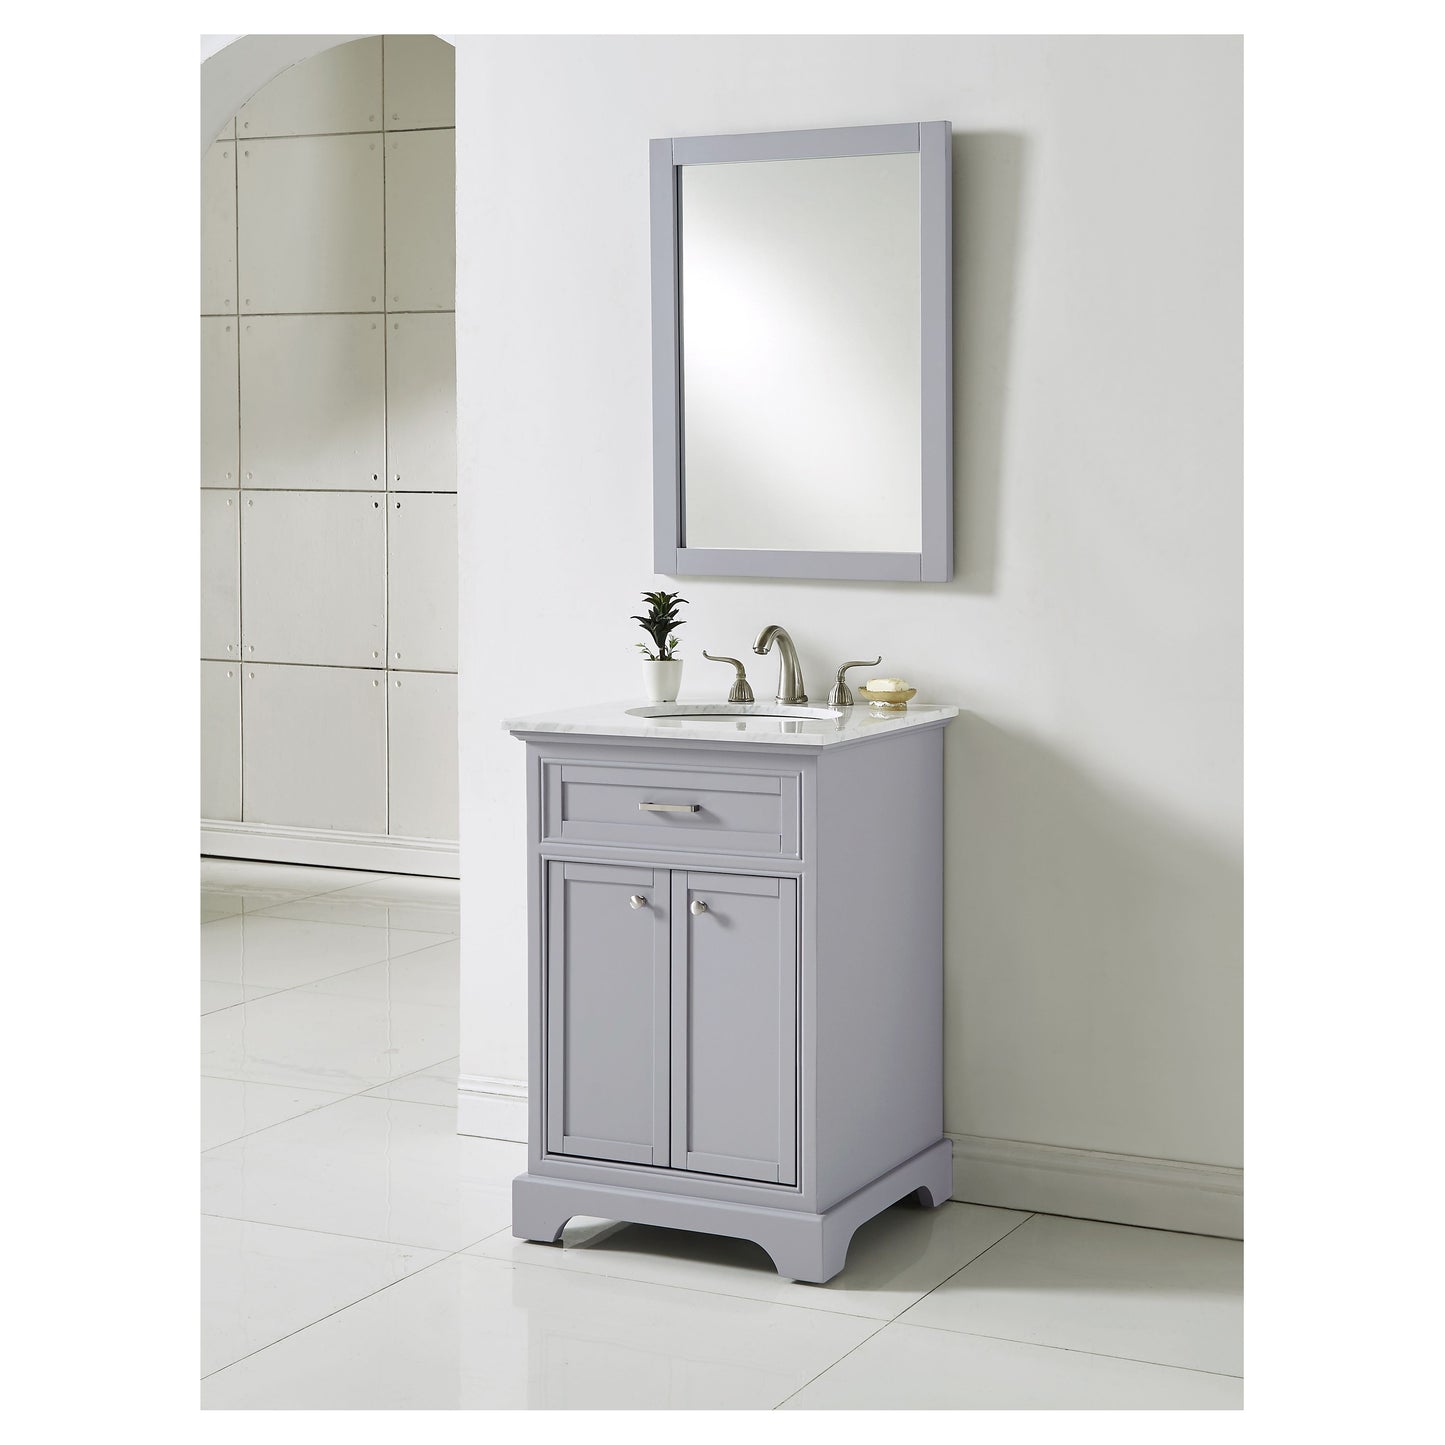 VF15024GR 24" Single Bathroom Vanity Set in Light Grey